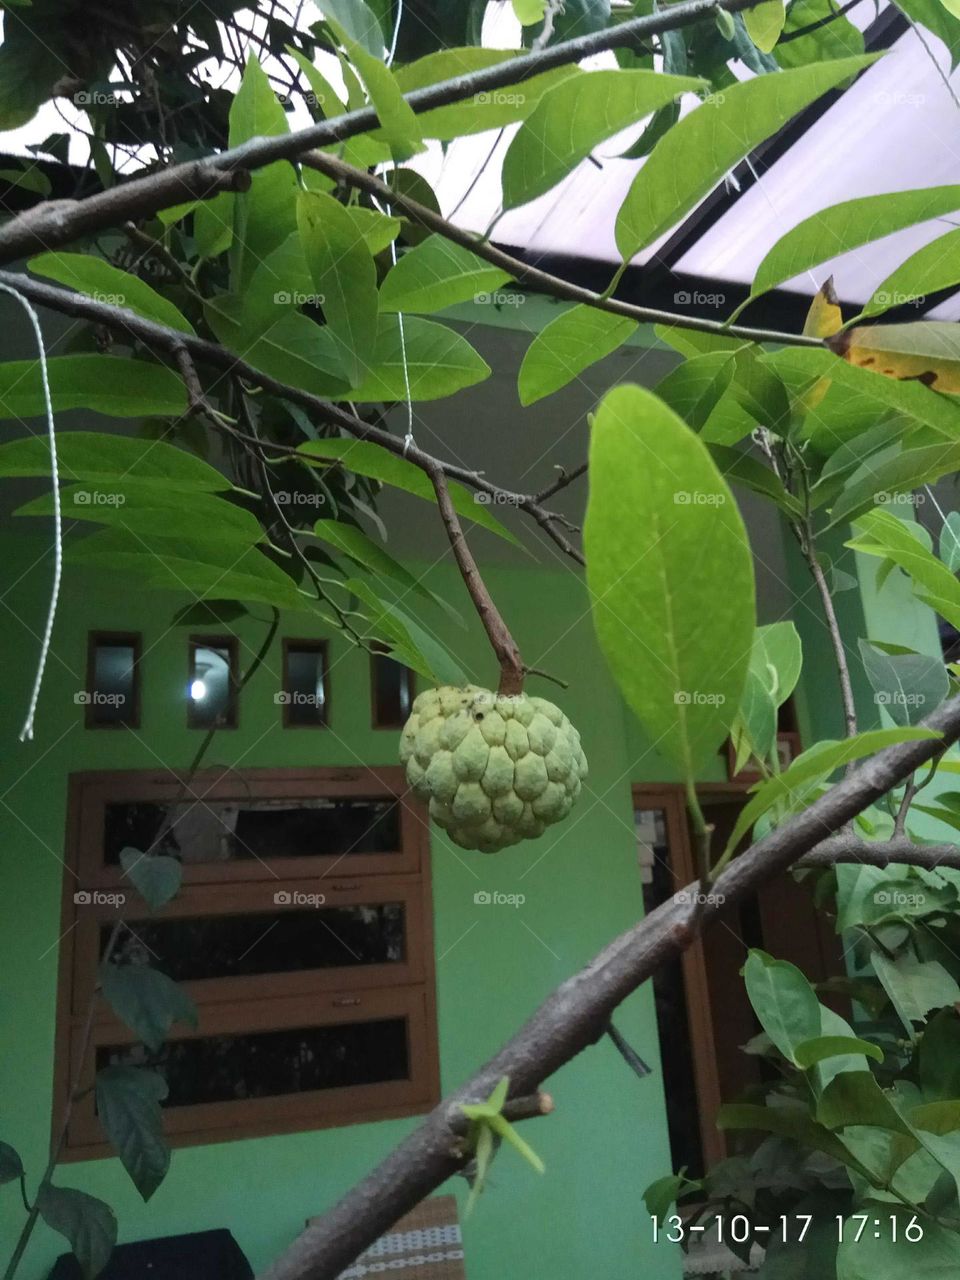 Srikaya fruit